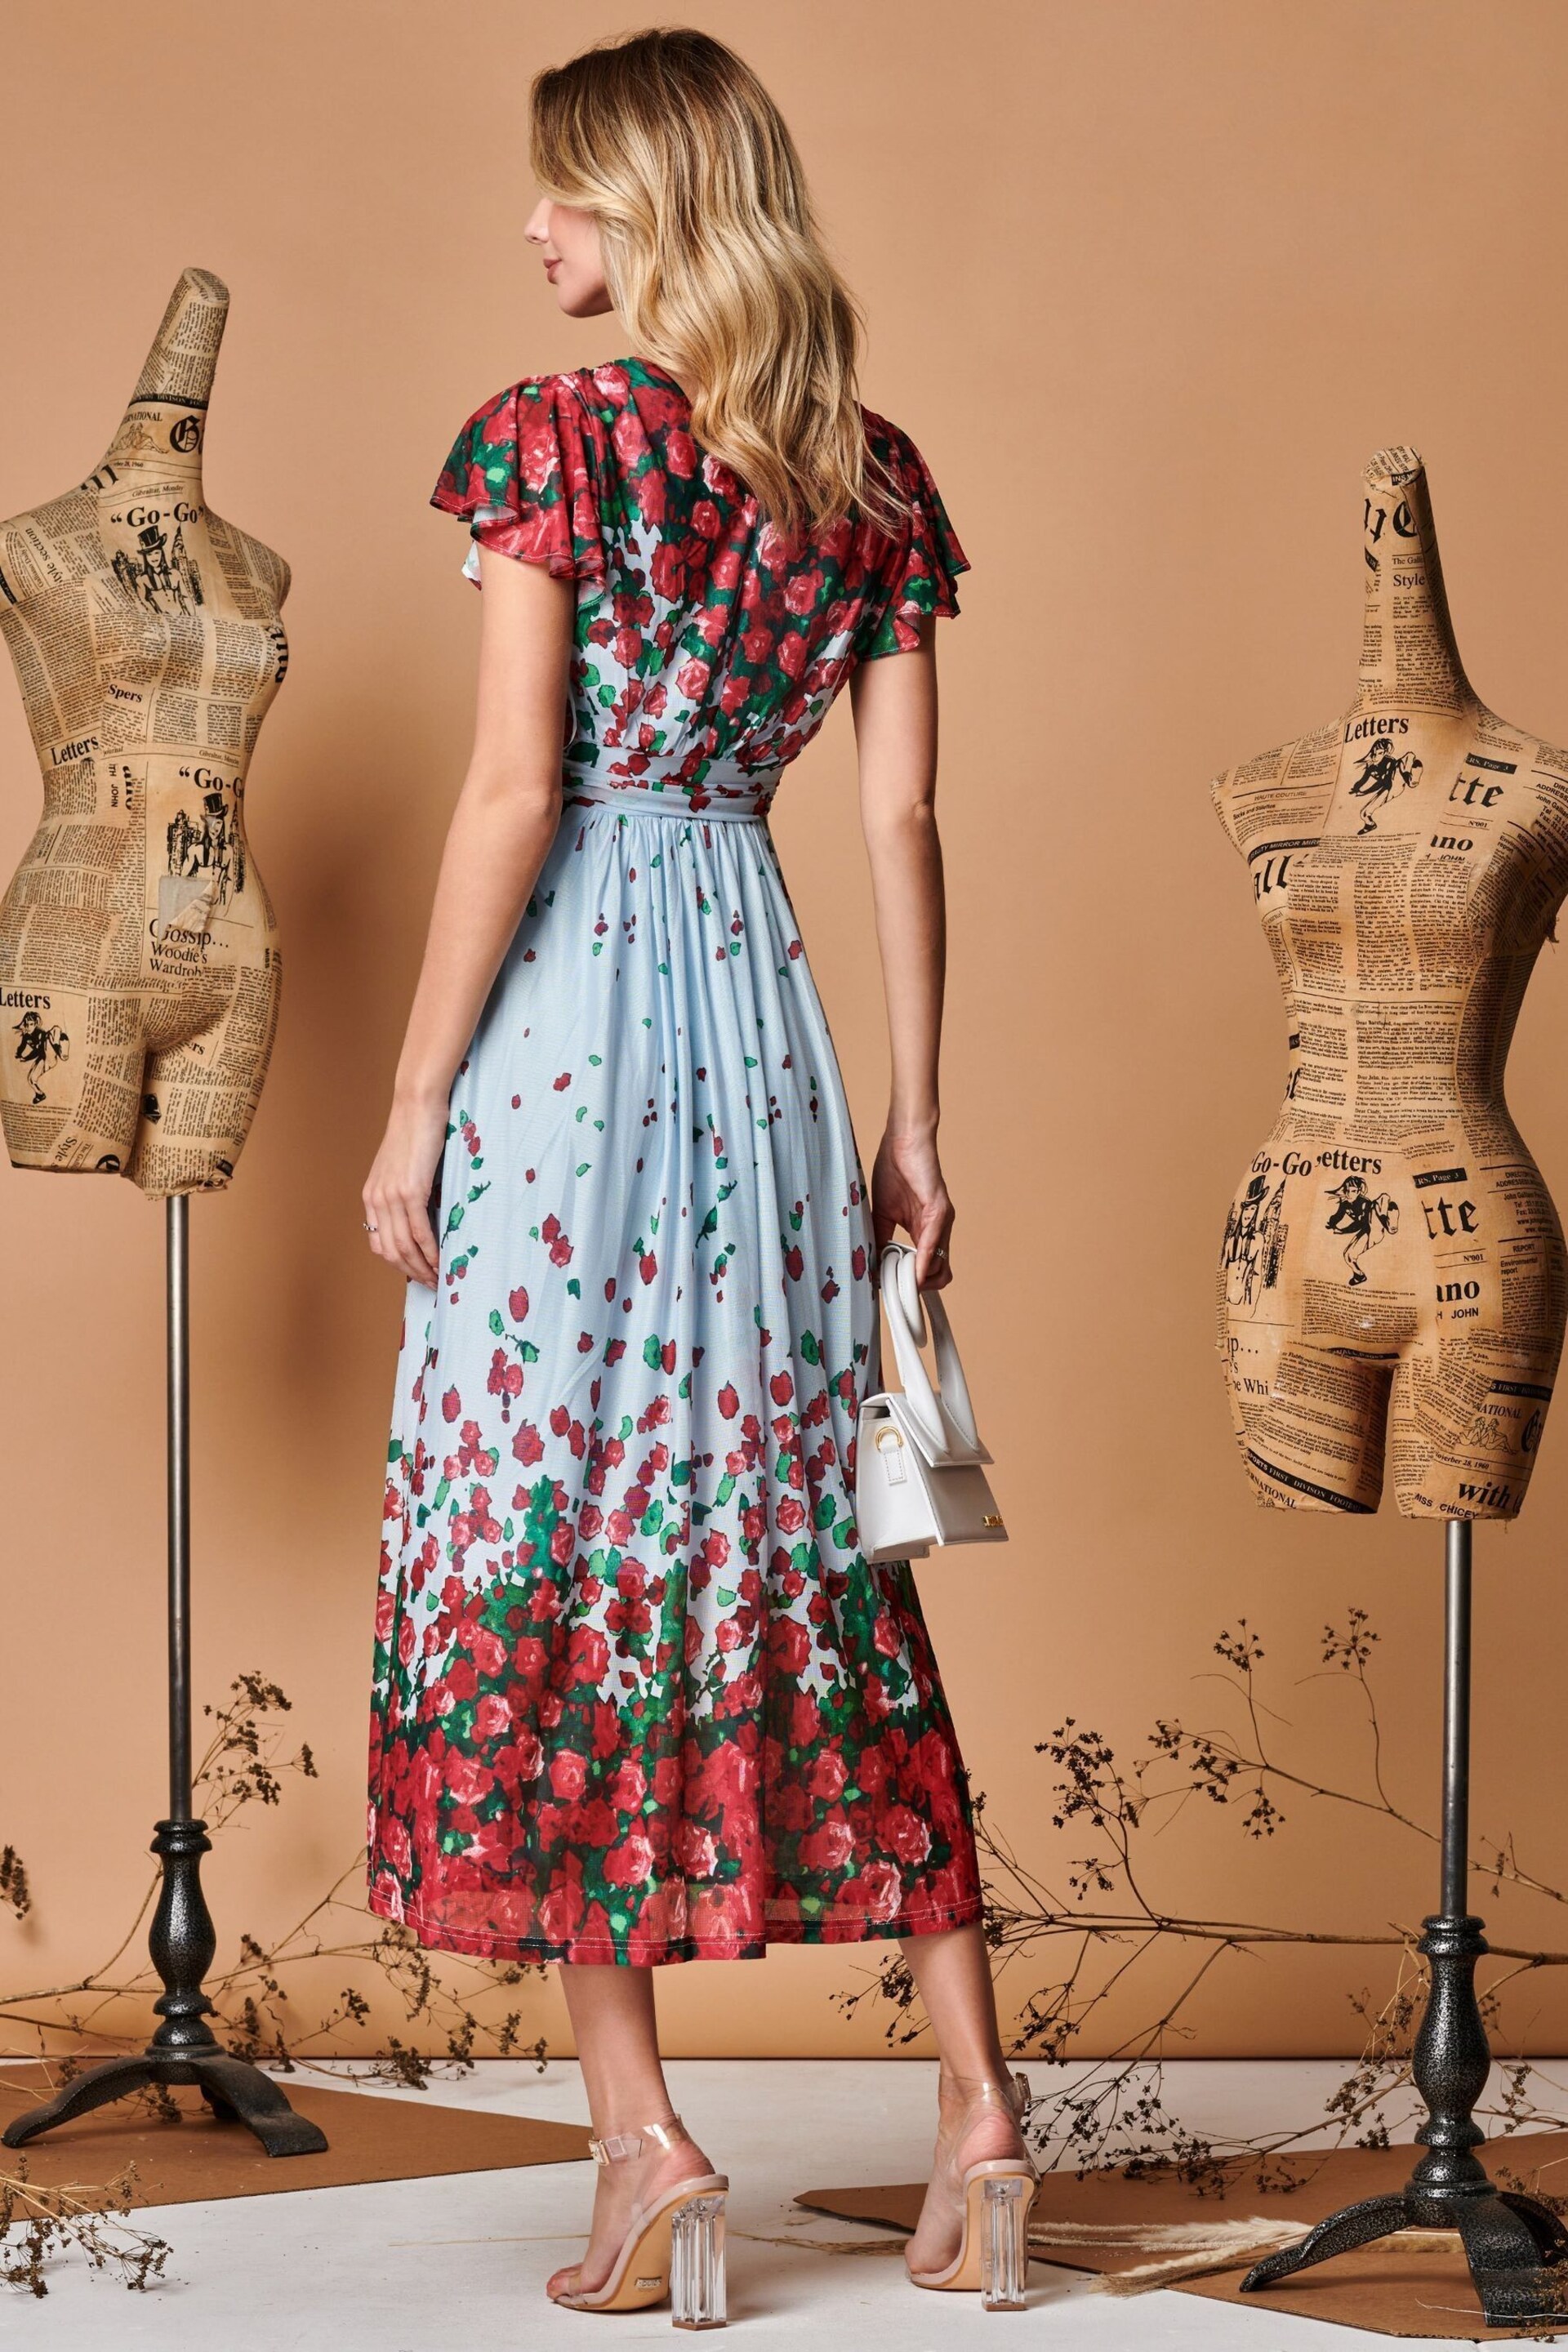 Jolie Moi Blue Symmetrical Floral Print Mesh Maxi Dress - Image 2 of 5